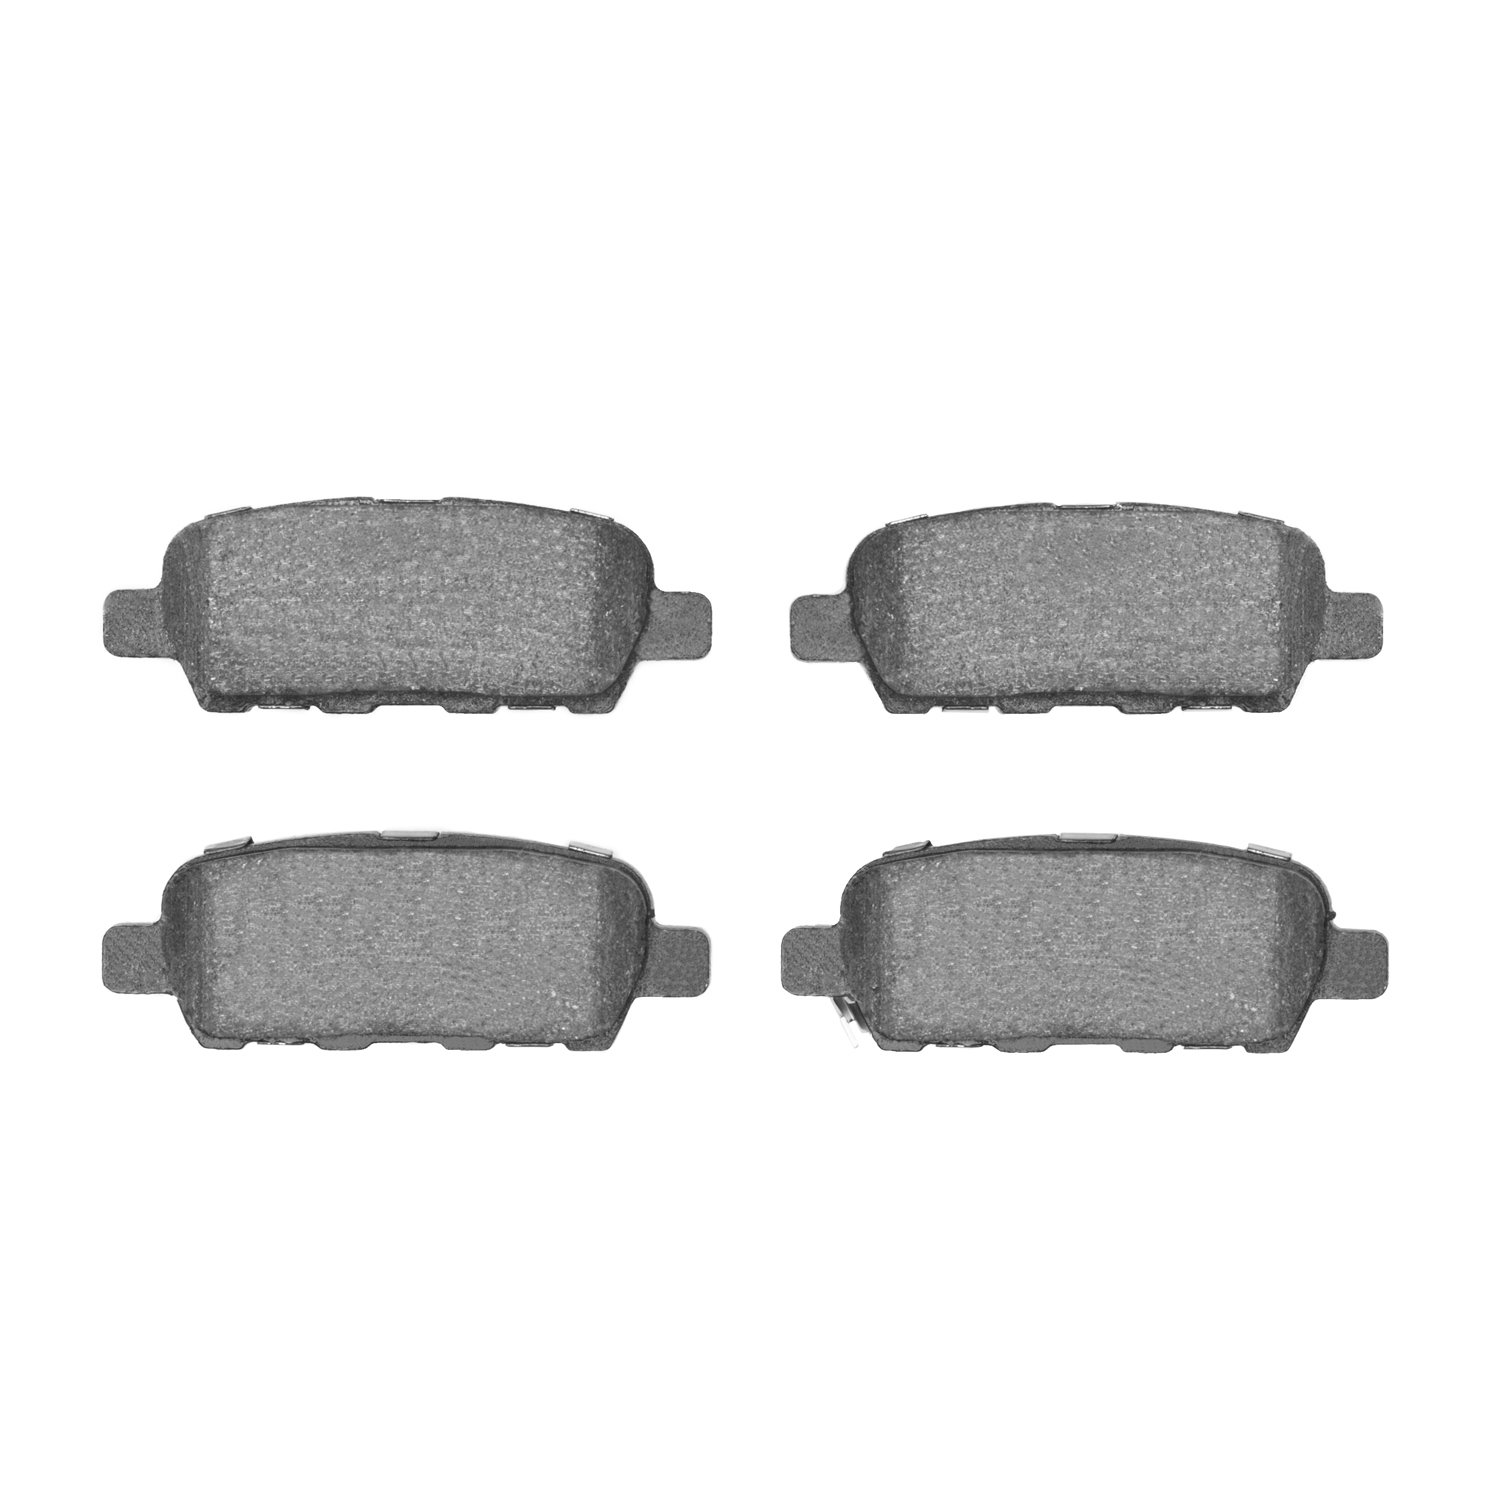 1000-0905-00 Track/Street Low-Metallic Brake Pads Kit, Fits Select Multiple Makes/Models, Position: Rear